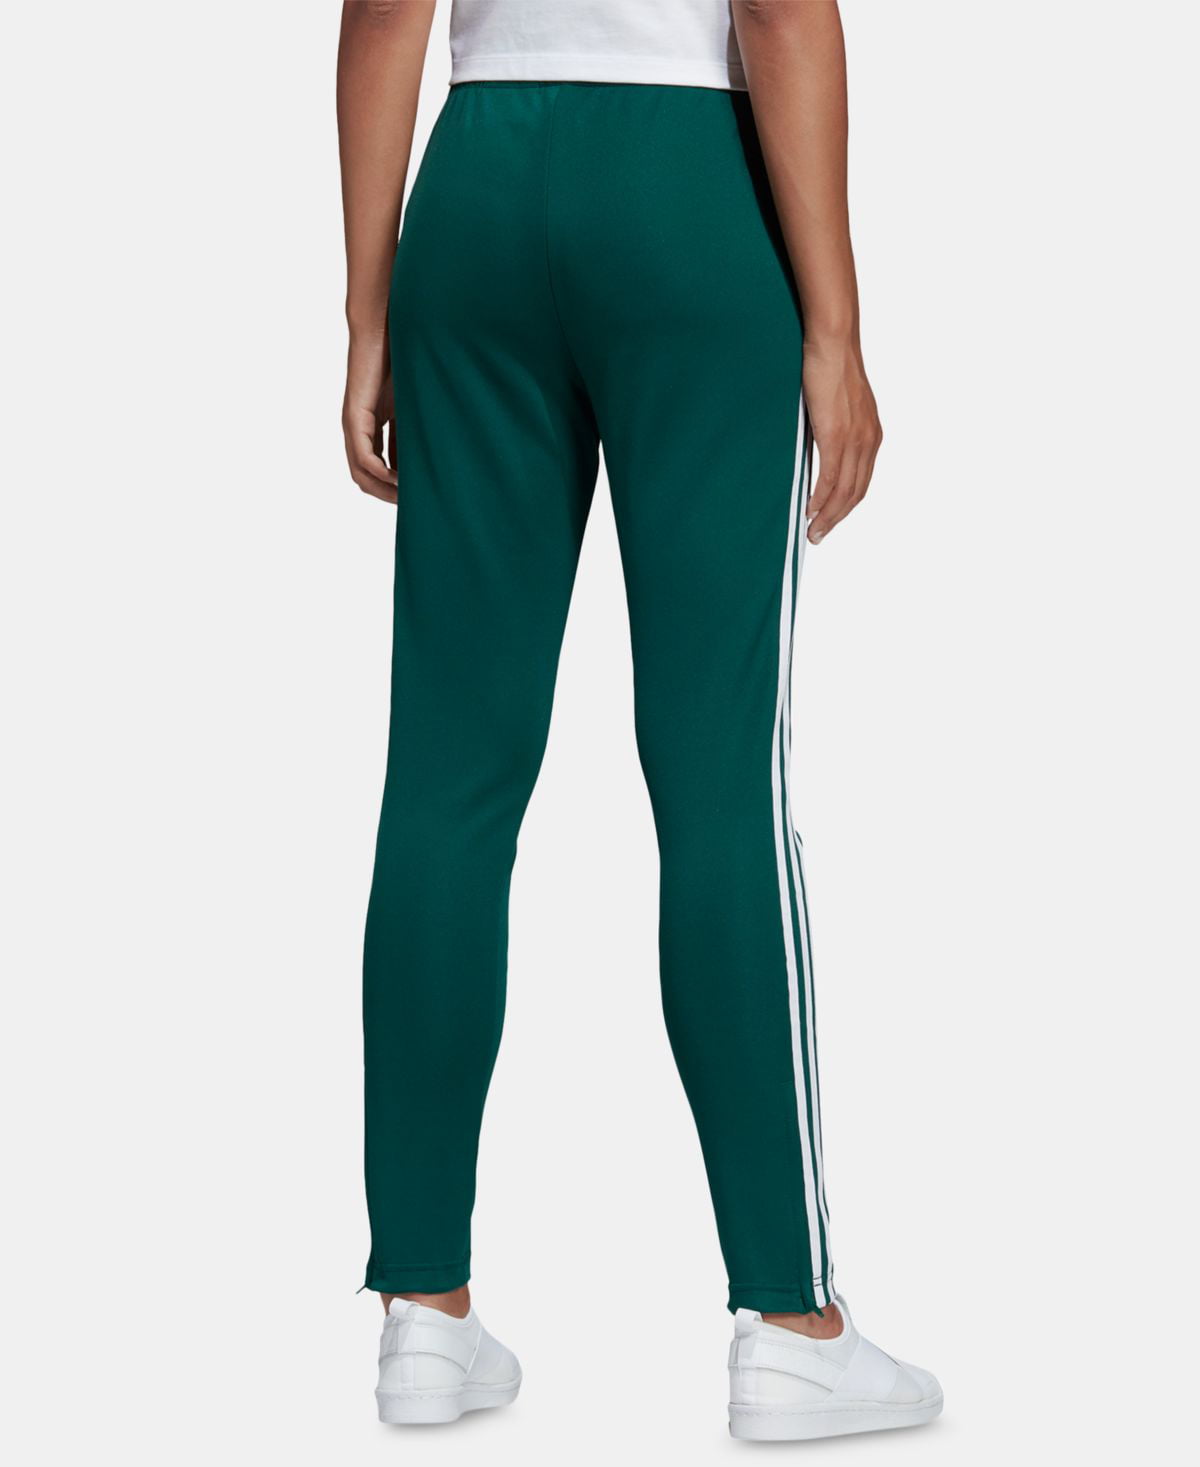 Green Pants Superstar Track Fitness Workout Adicolor Originals adidas S Womens